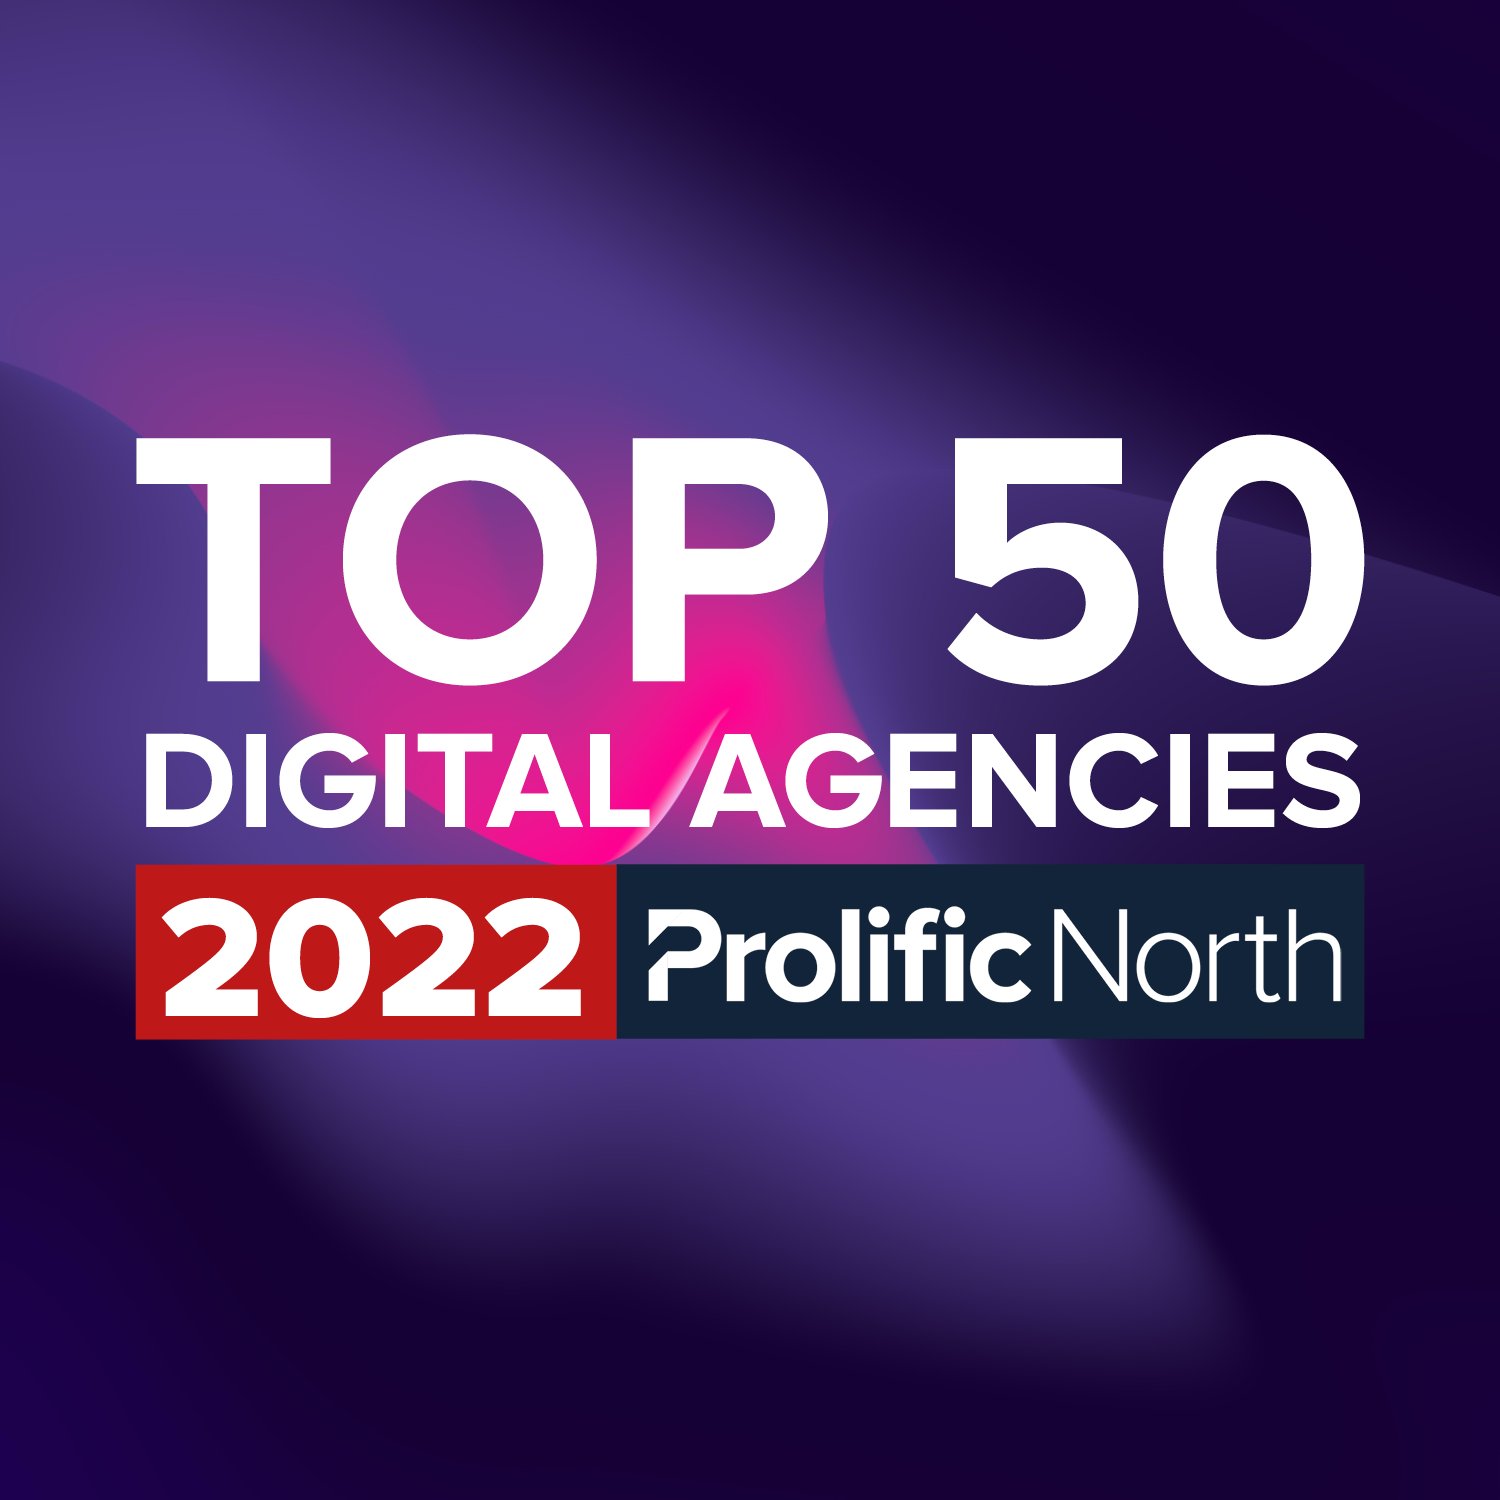 Top 50 Digital Agencies 2022 Prolific North